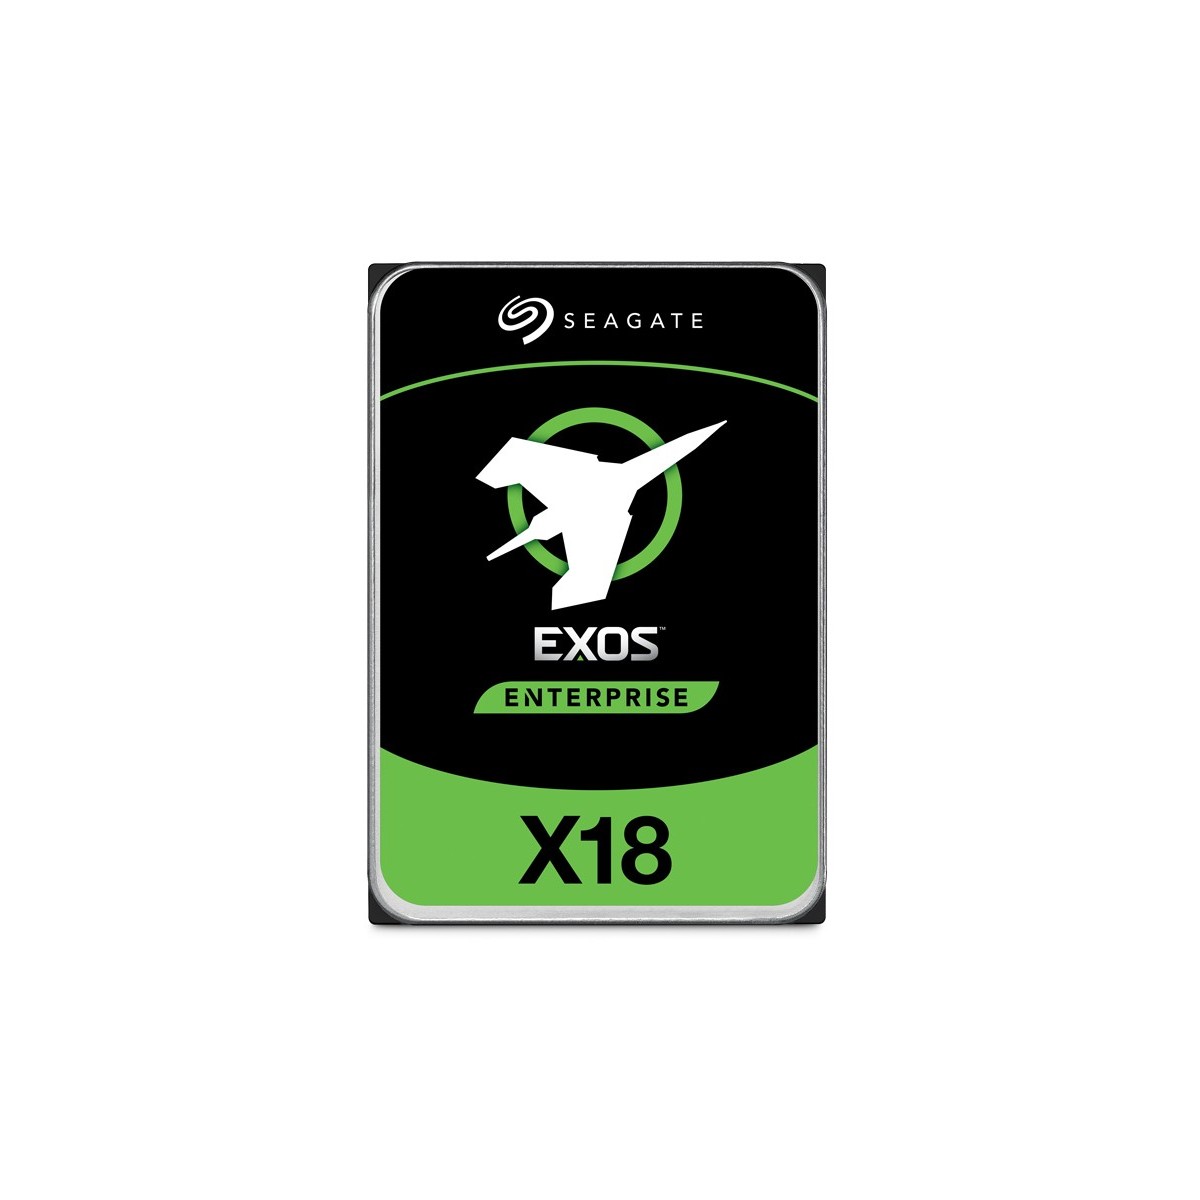 Seagate ENTERPRISE C EXOS X18 14TB 3.5IN 7200RPM SATA HELIUM 512E - Serial ATA - 14,000 GB